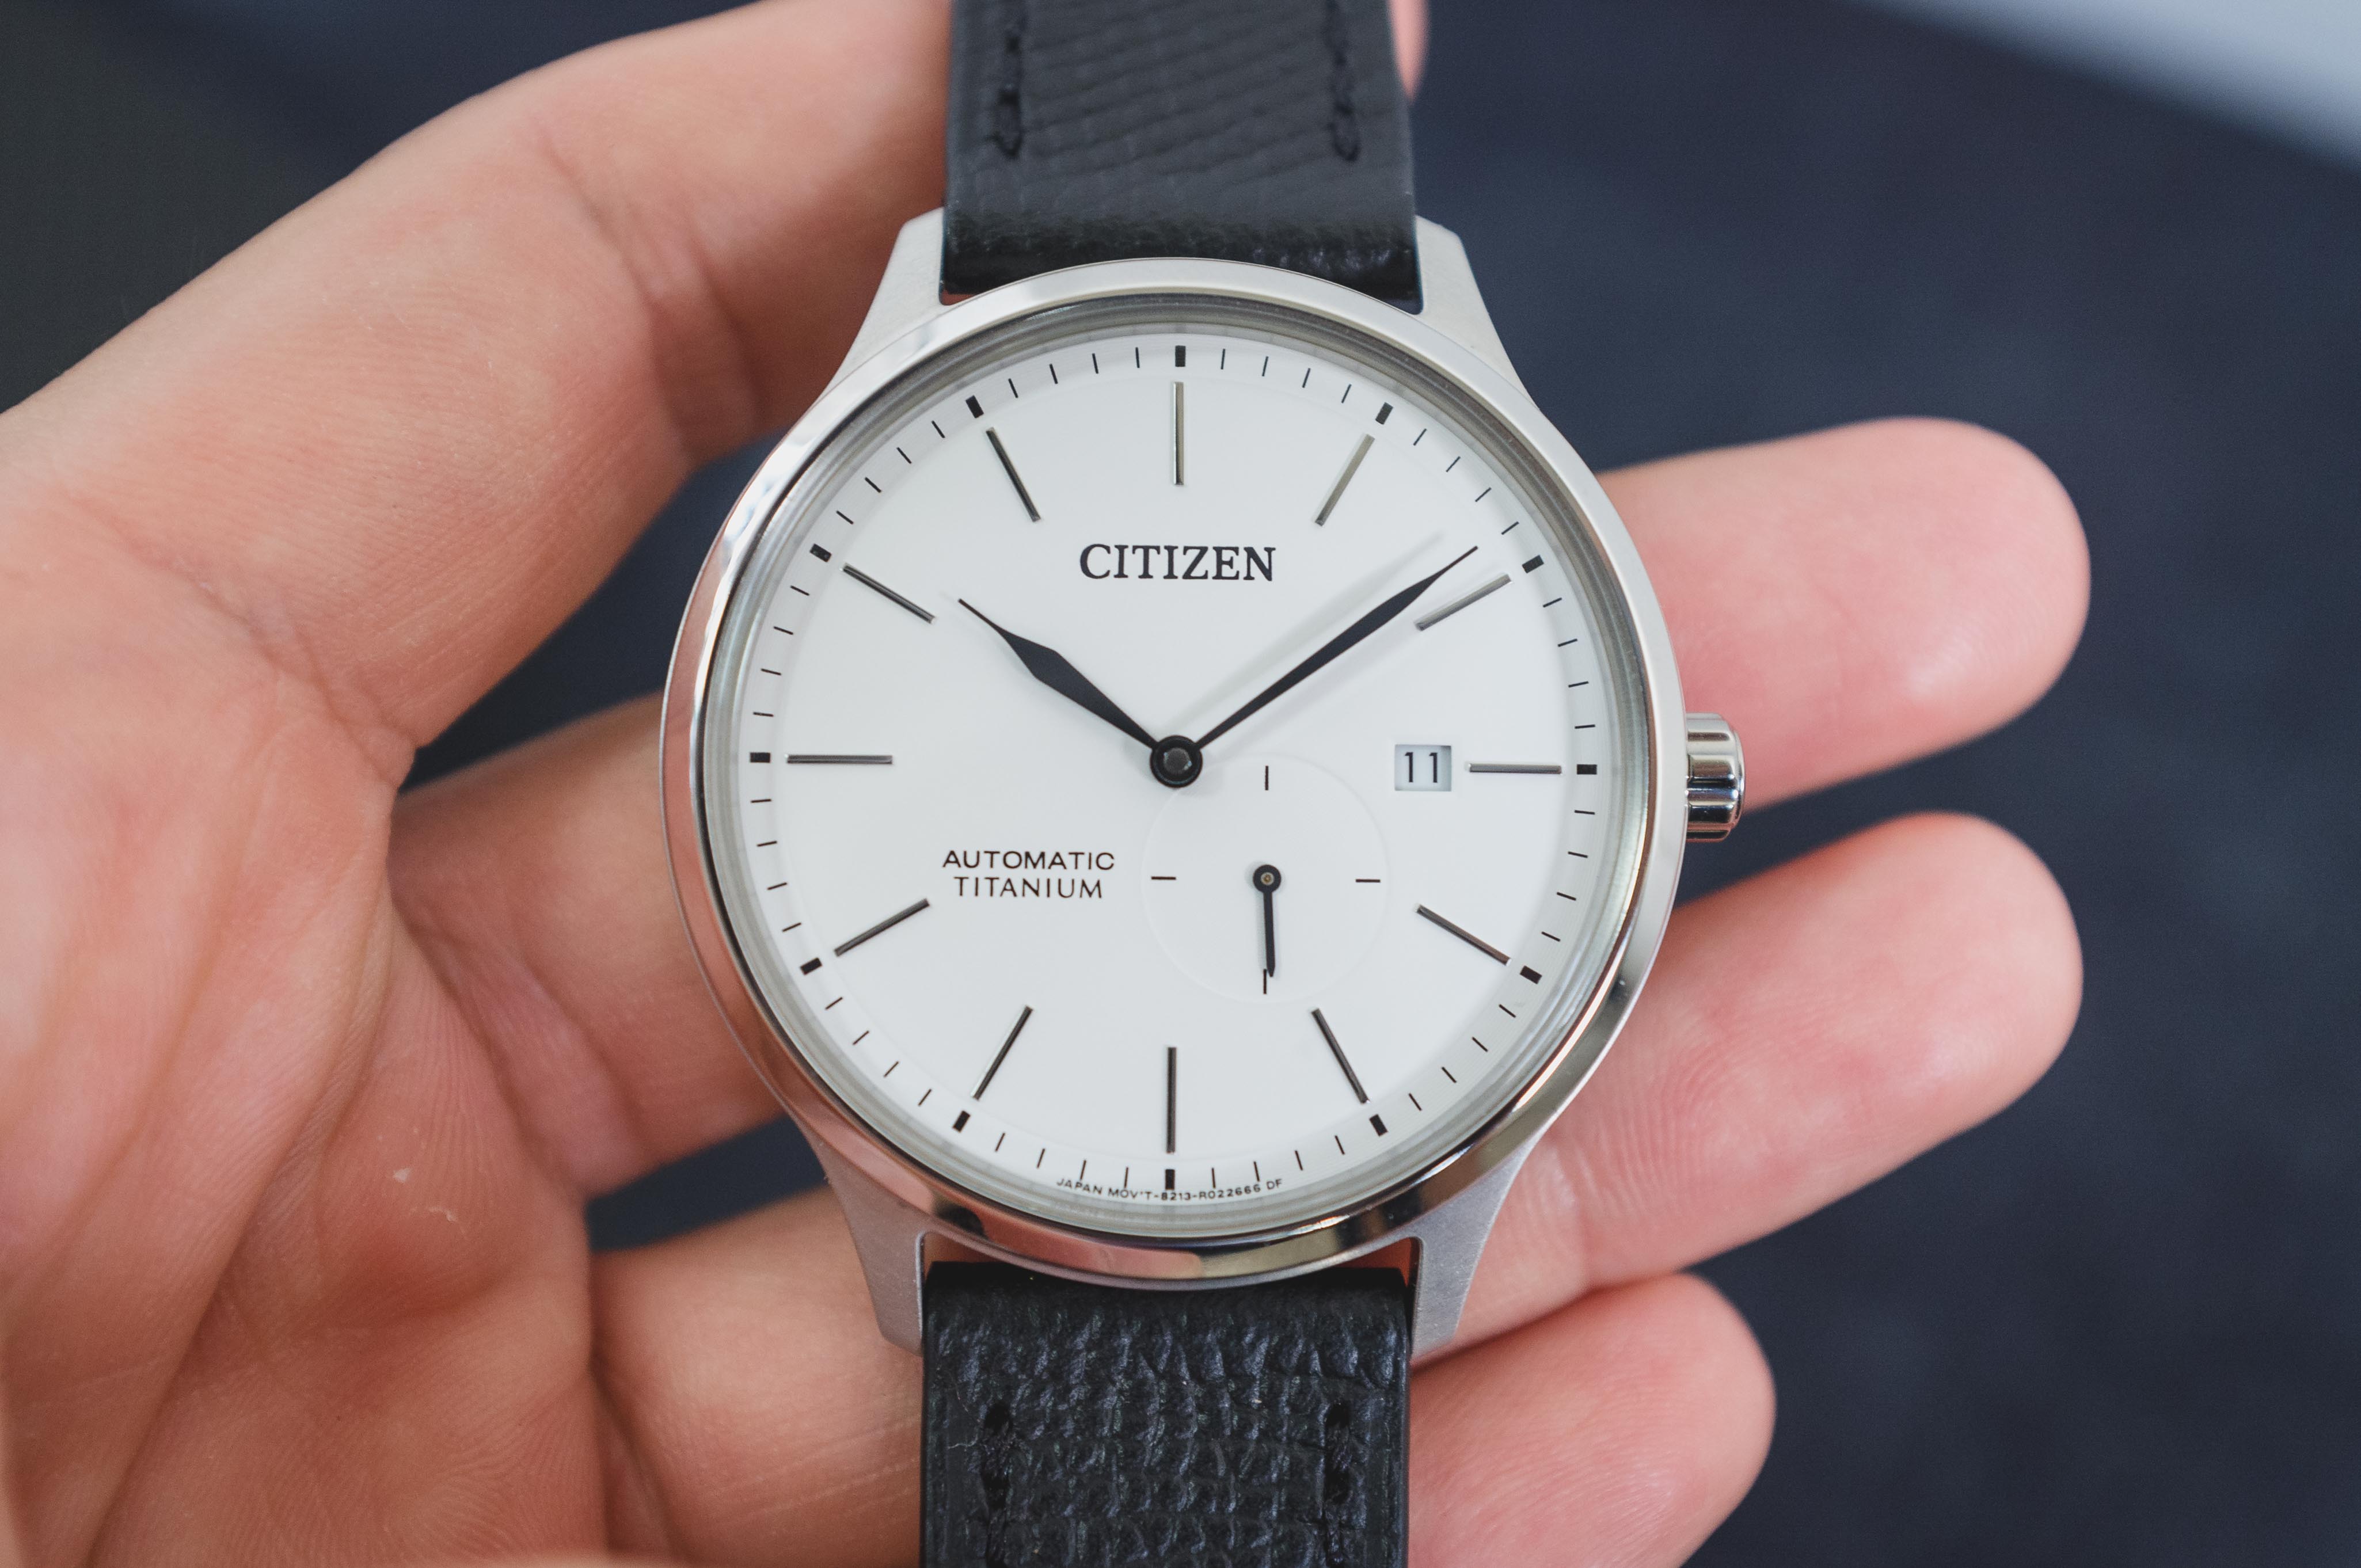 NJ0090-81A, Reloj Citizen Automático Hombre